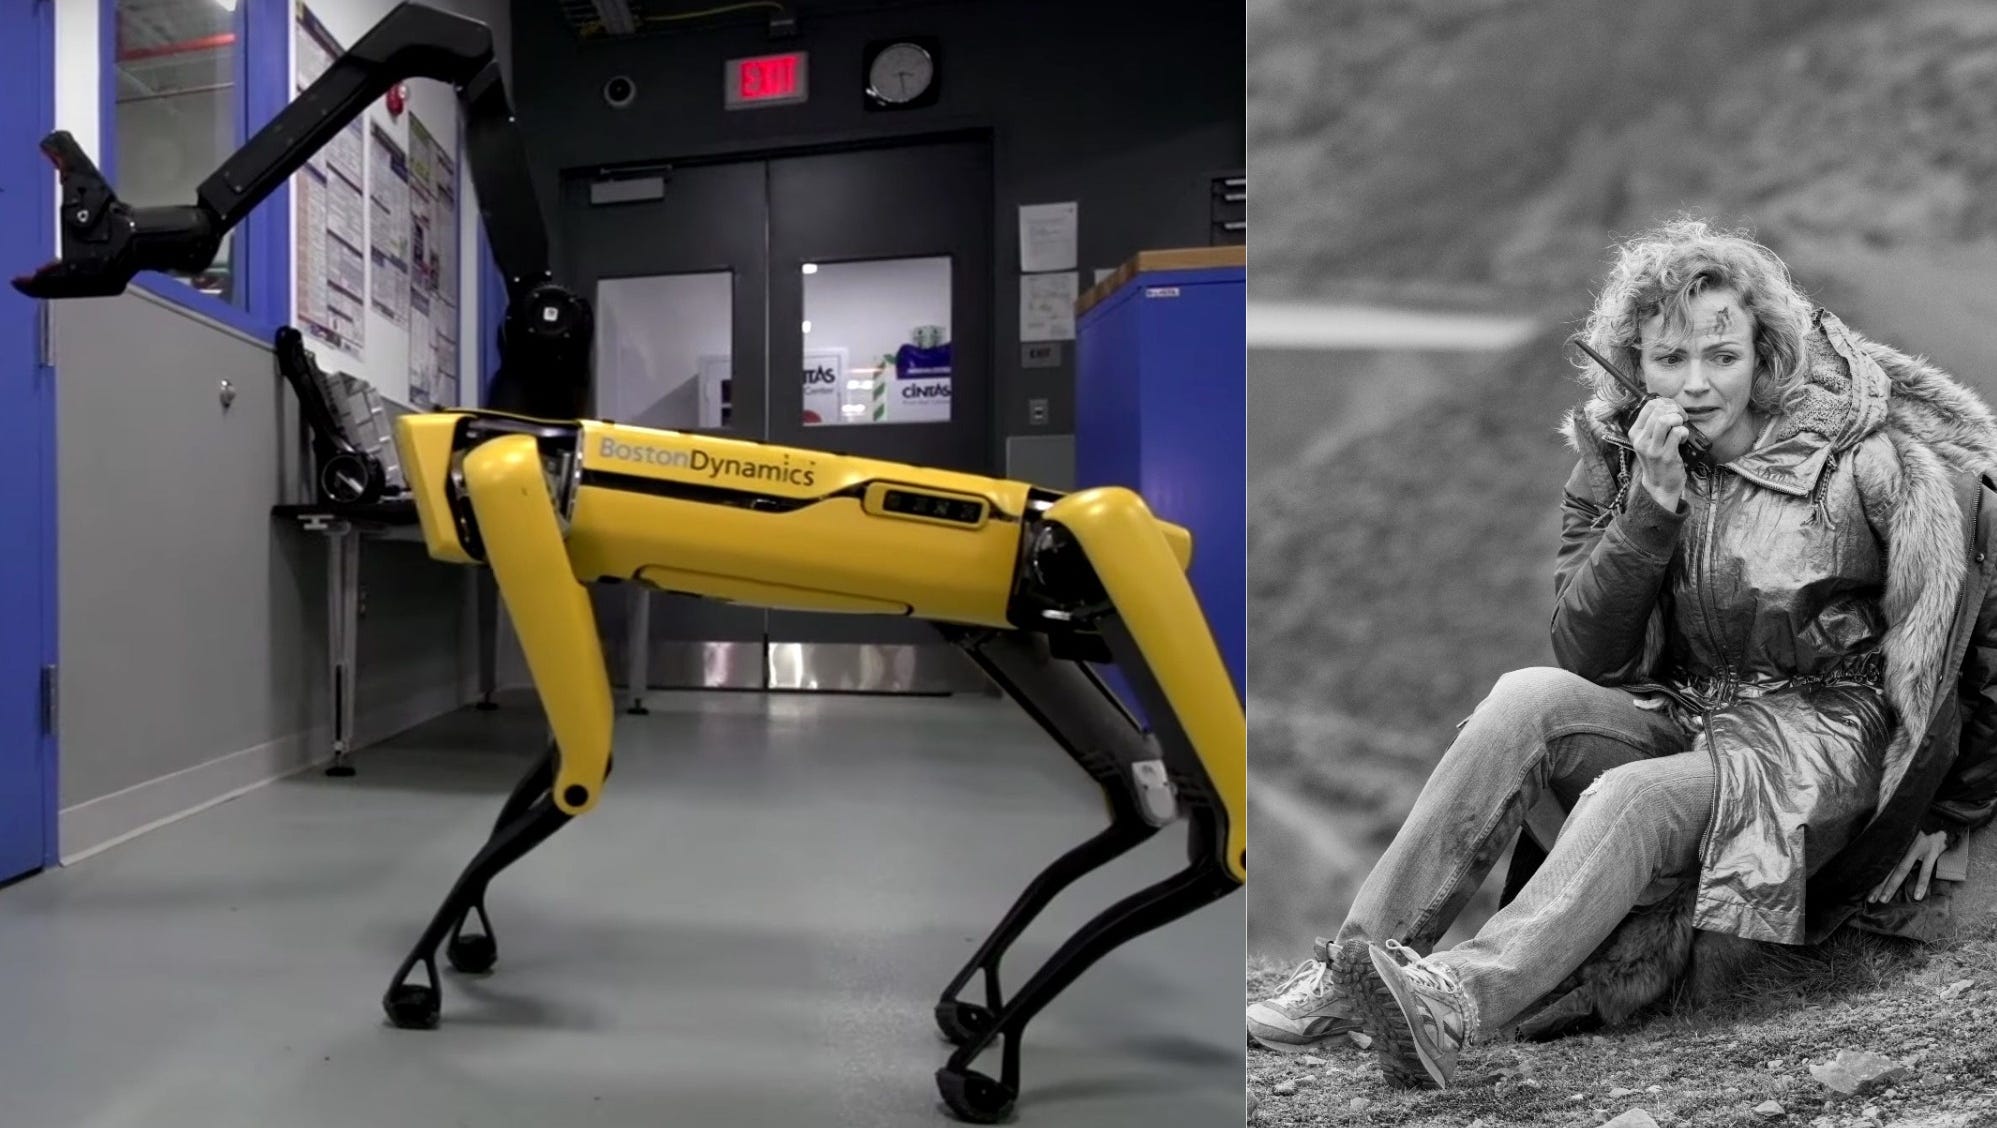 Mirror's 'Metalhead' to life by Boston Dynamics robot dog